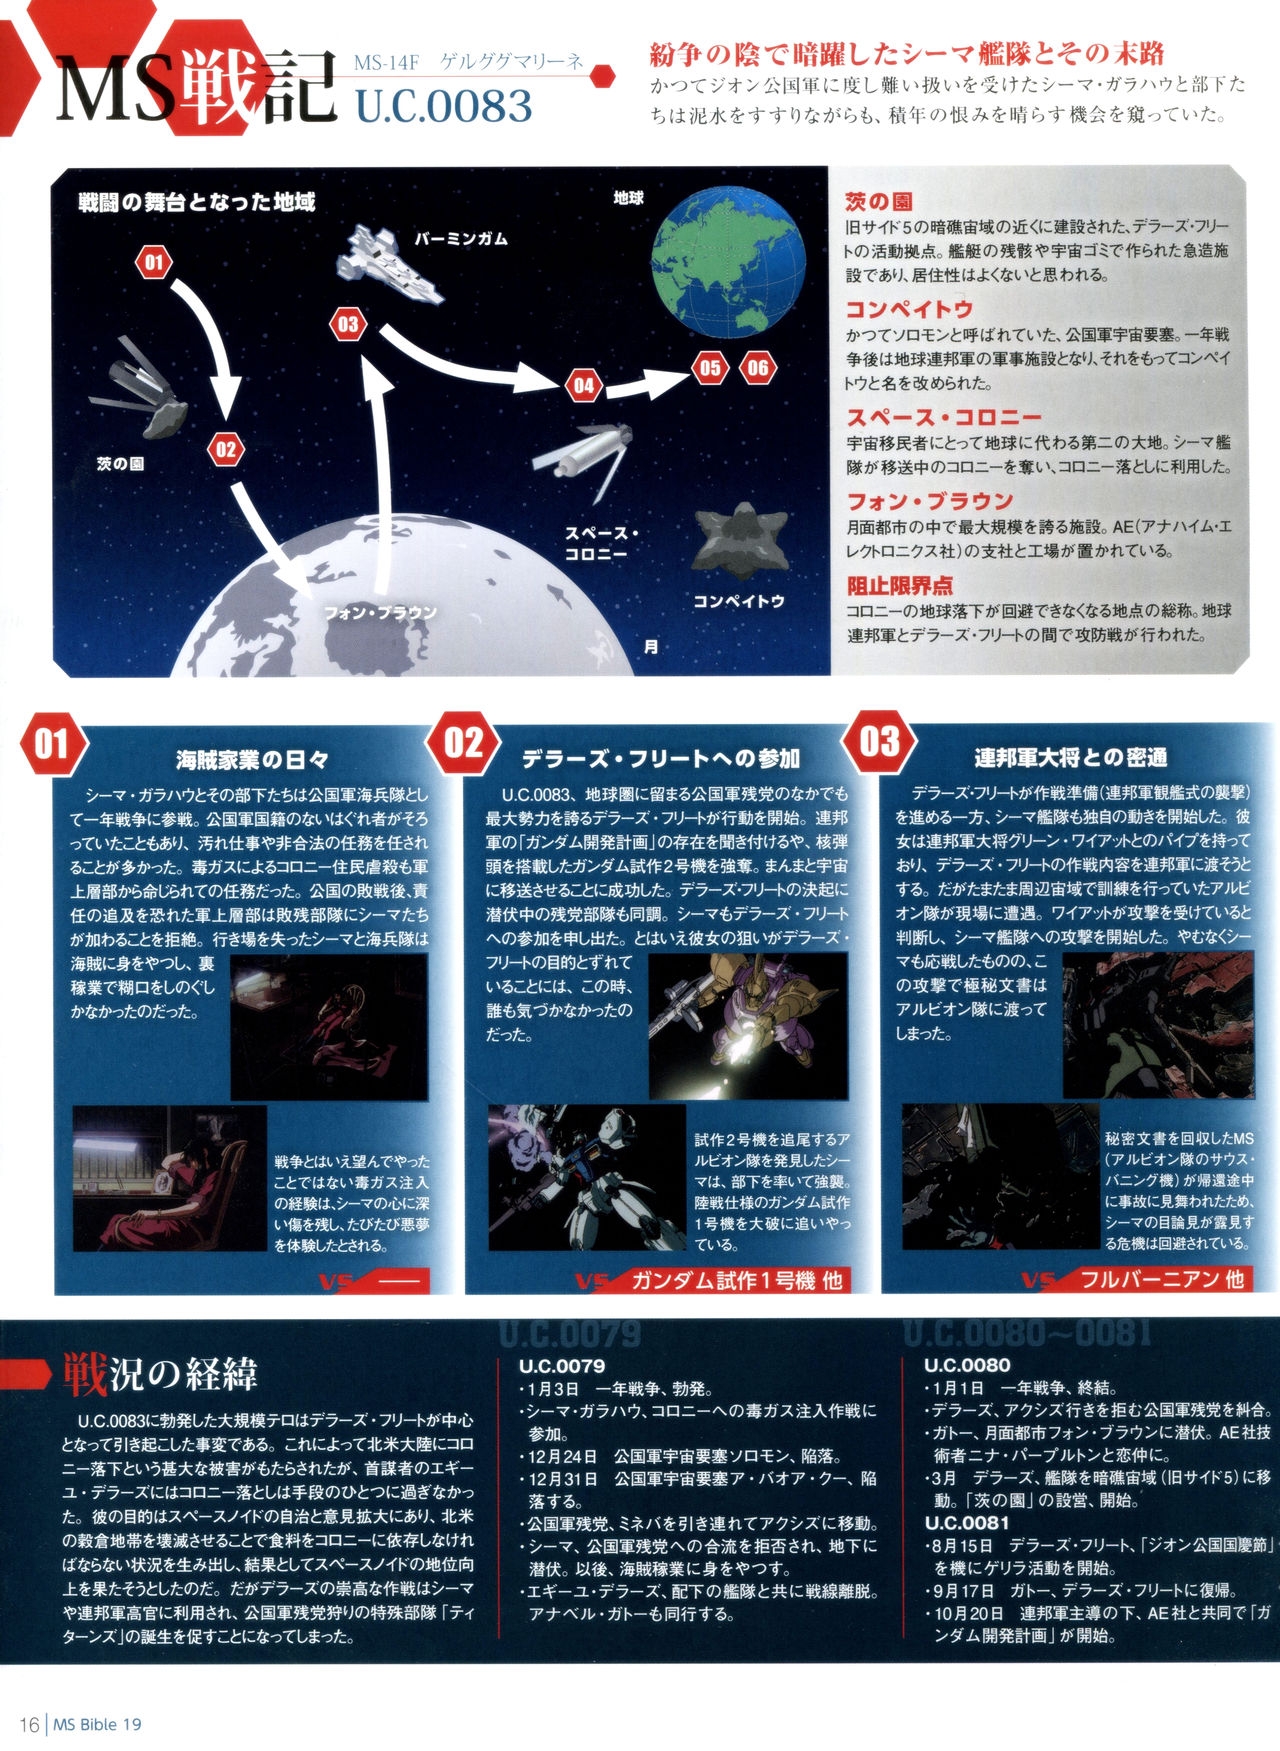 Gundam Mobile Suit Bible 19 17